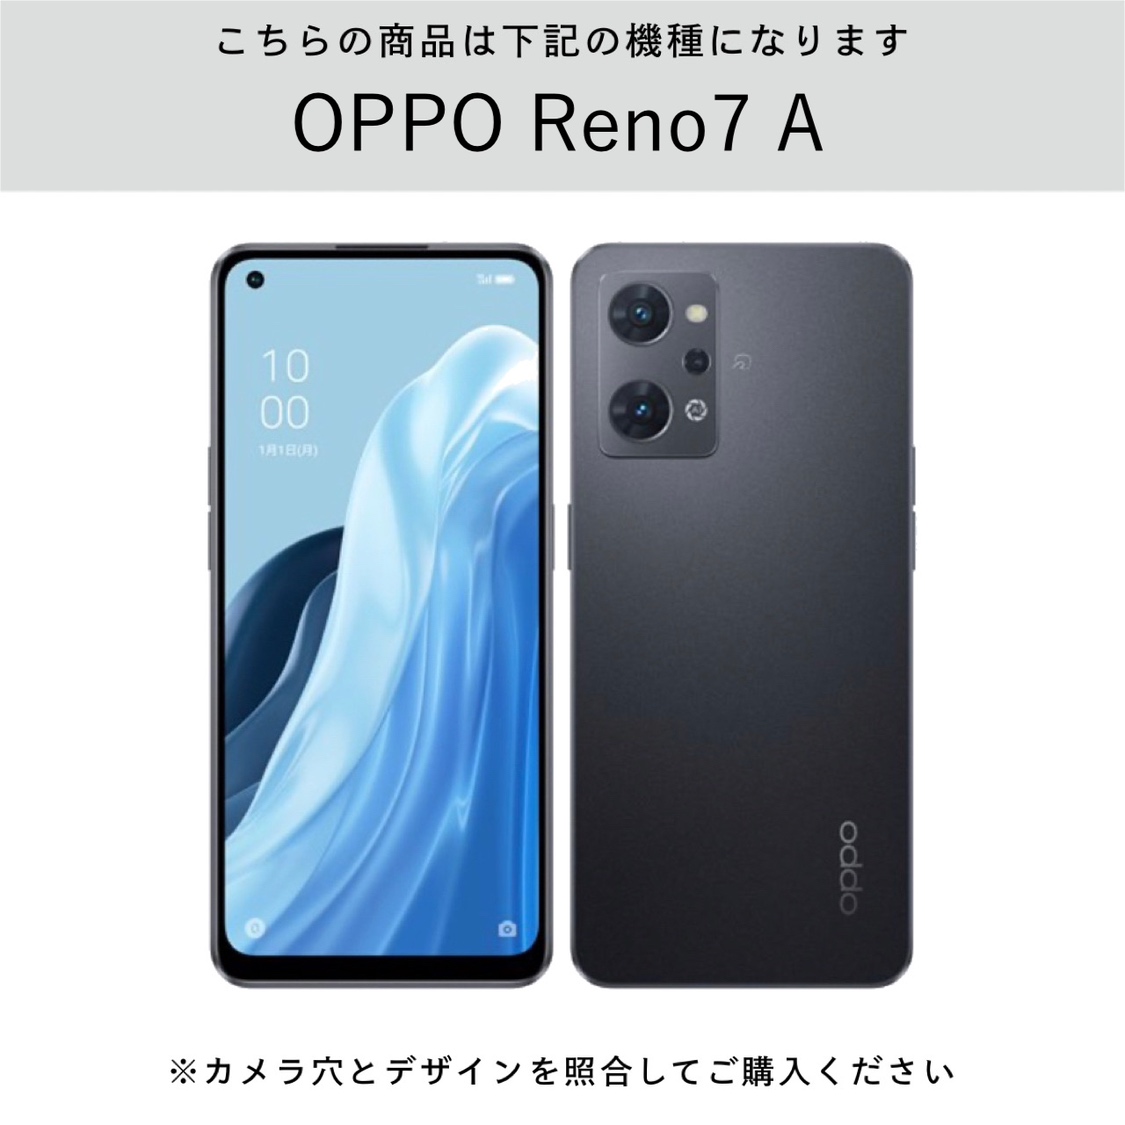 OPPO Reno 7a オッポ レノ デザイン スマホ スマートフォン 携帯 